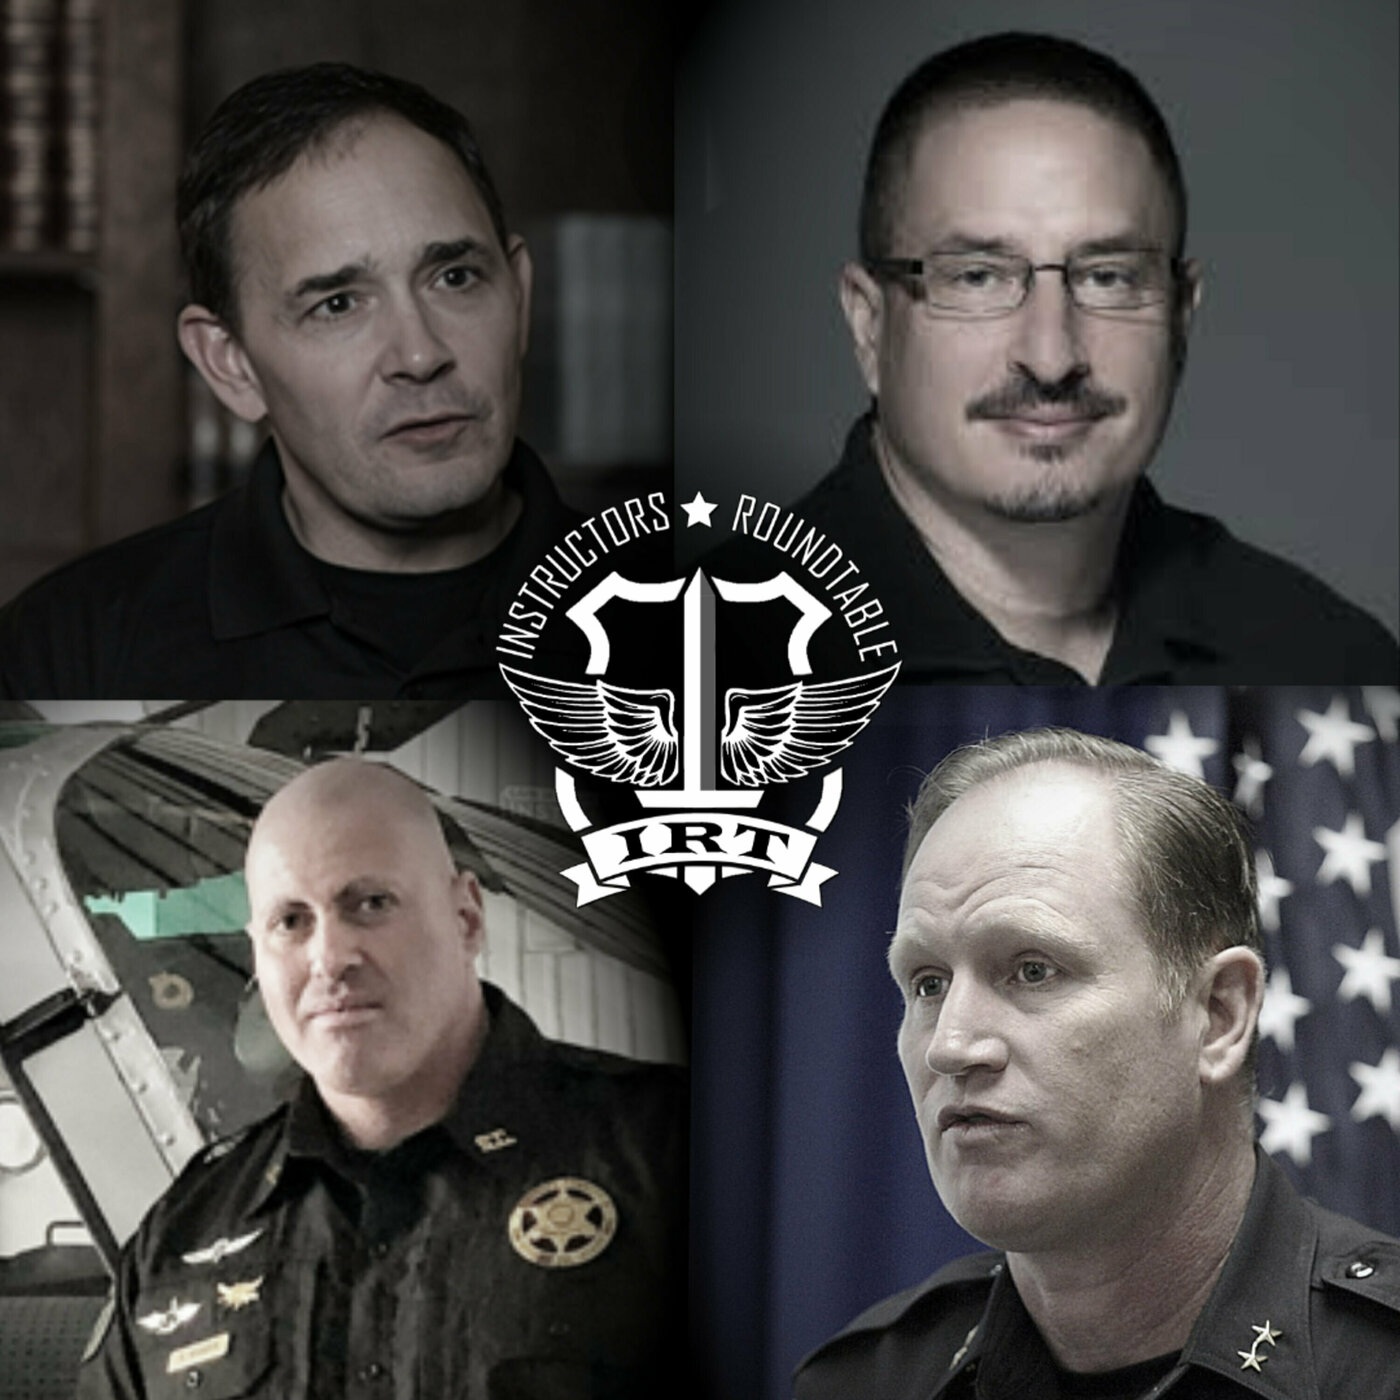 IRT - Round 05 - Critical Incident Response Teams with Lon Bartel, Nir Manan, James Hamilton, and Dan Flippo